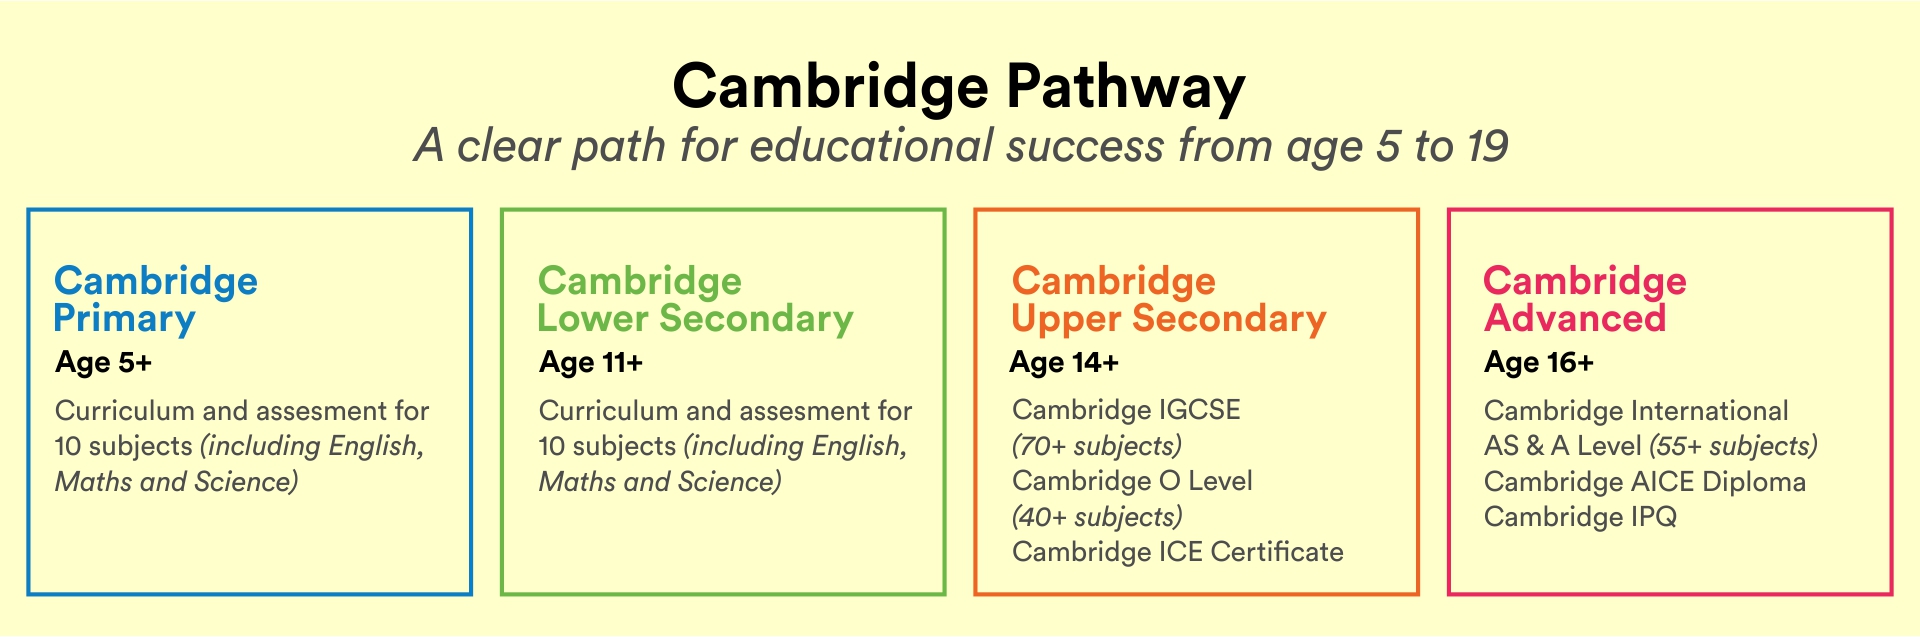 Cambridge pathway berdasarkan usia